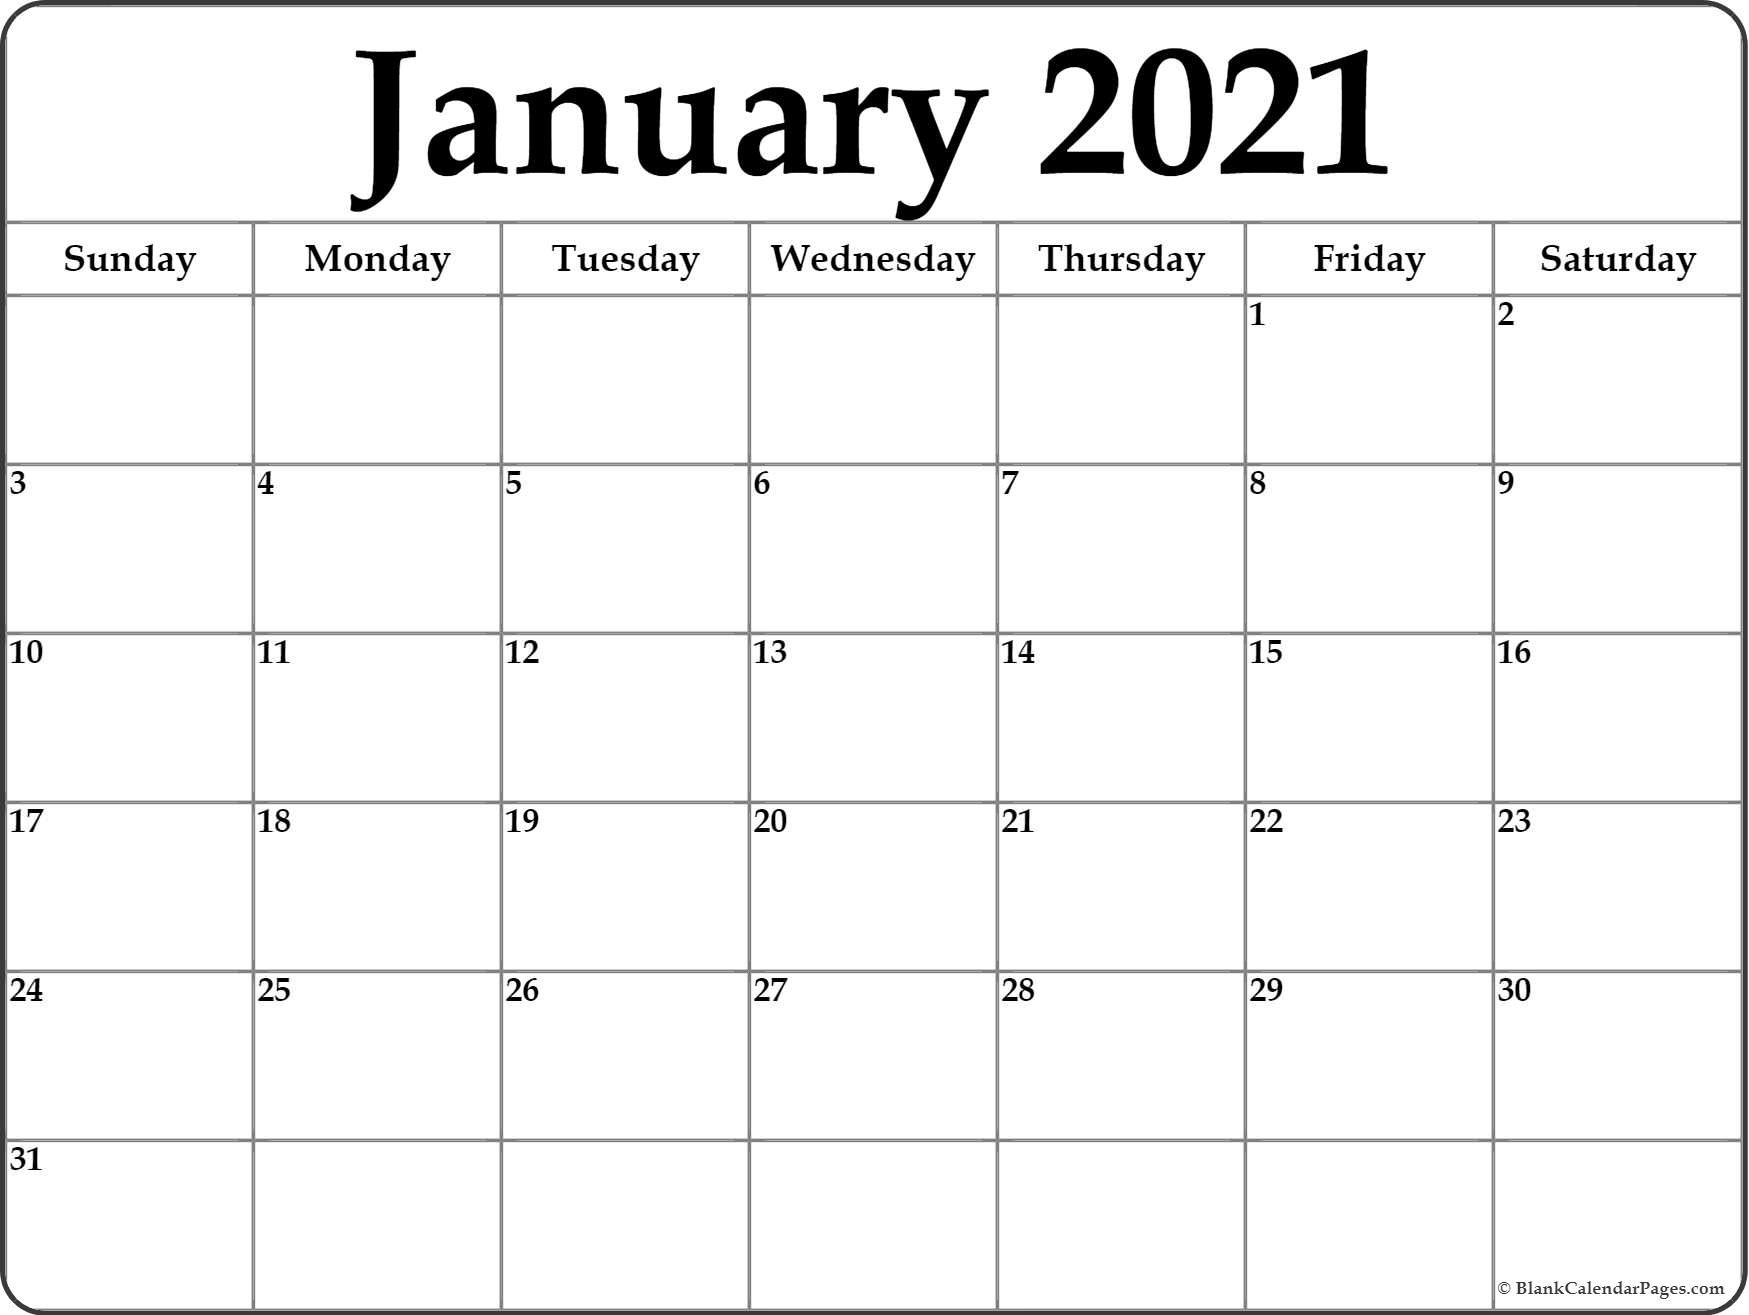 January 2021 Calendar | Free Printable Monthly Calendars